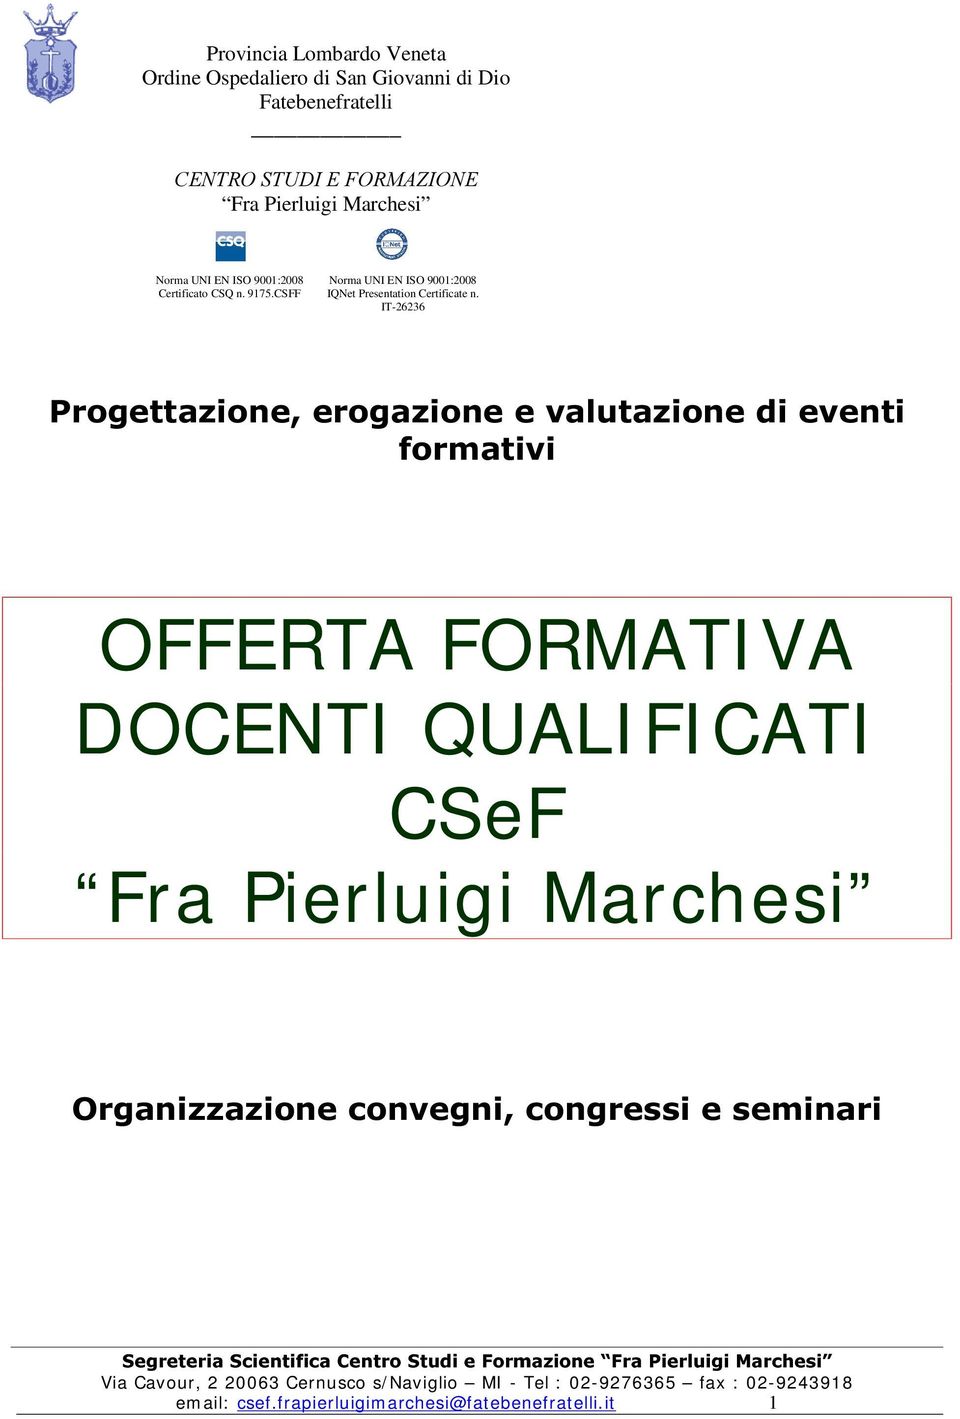 CSFF Norma UNI EN ISO 9001:2008 IQNet Presentation Certificate n.